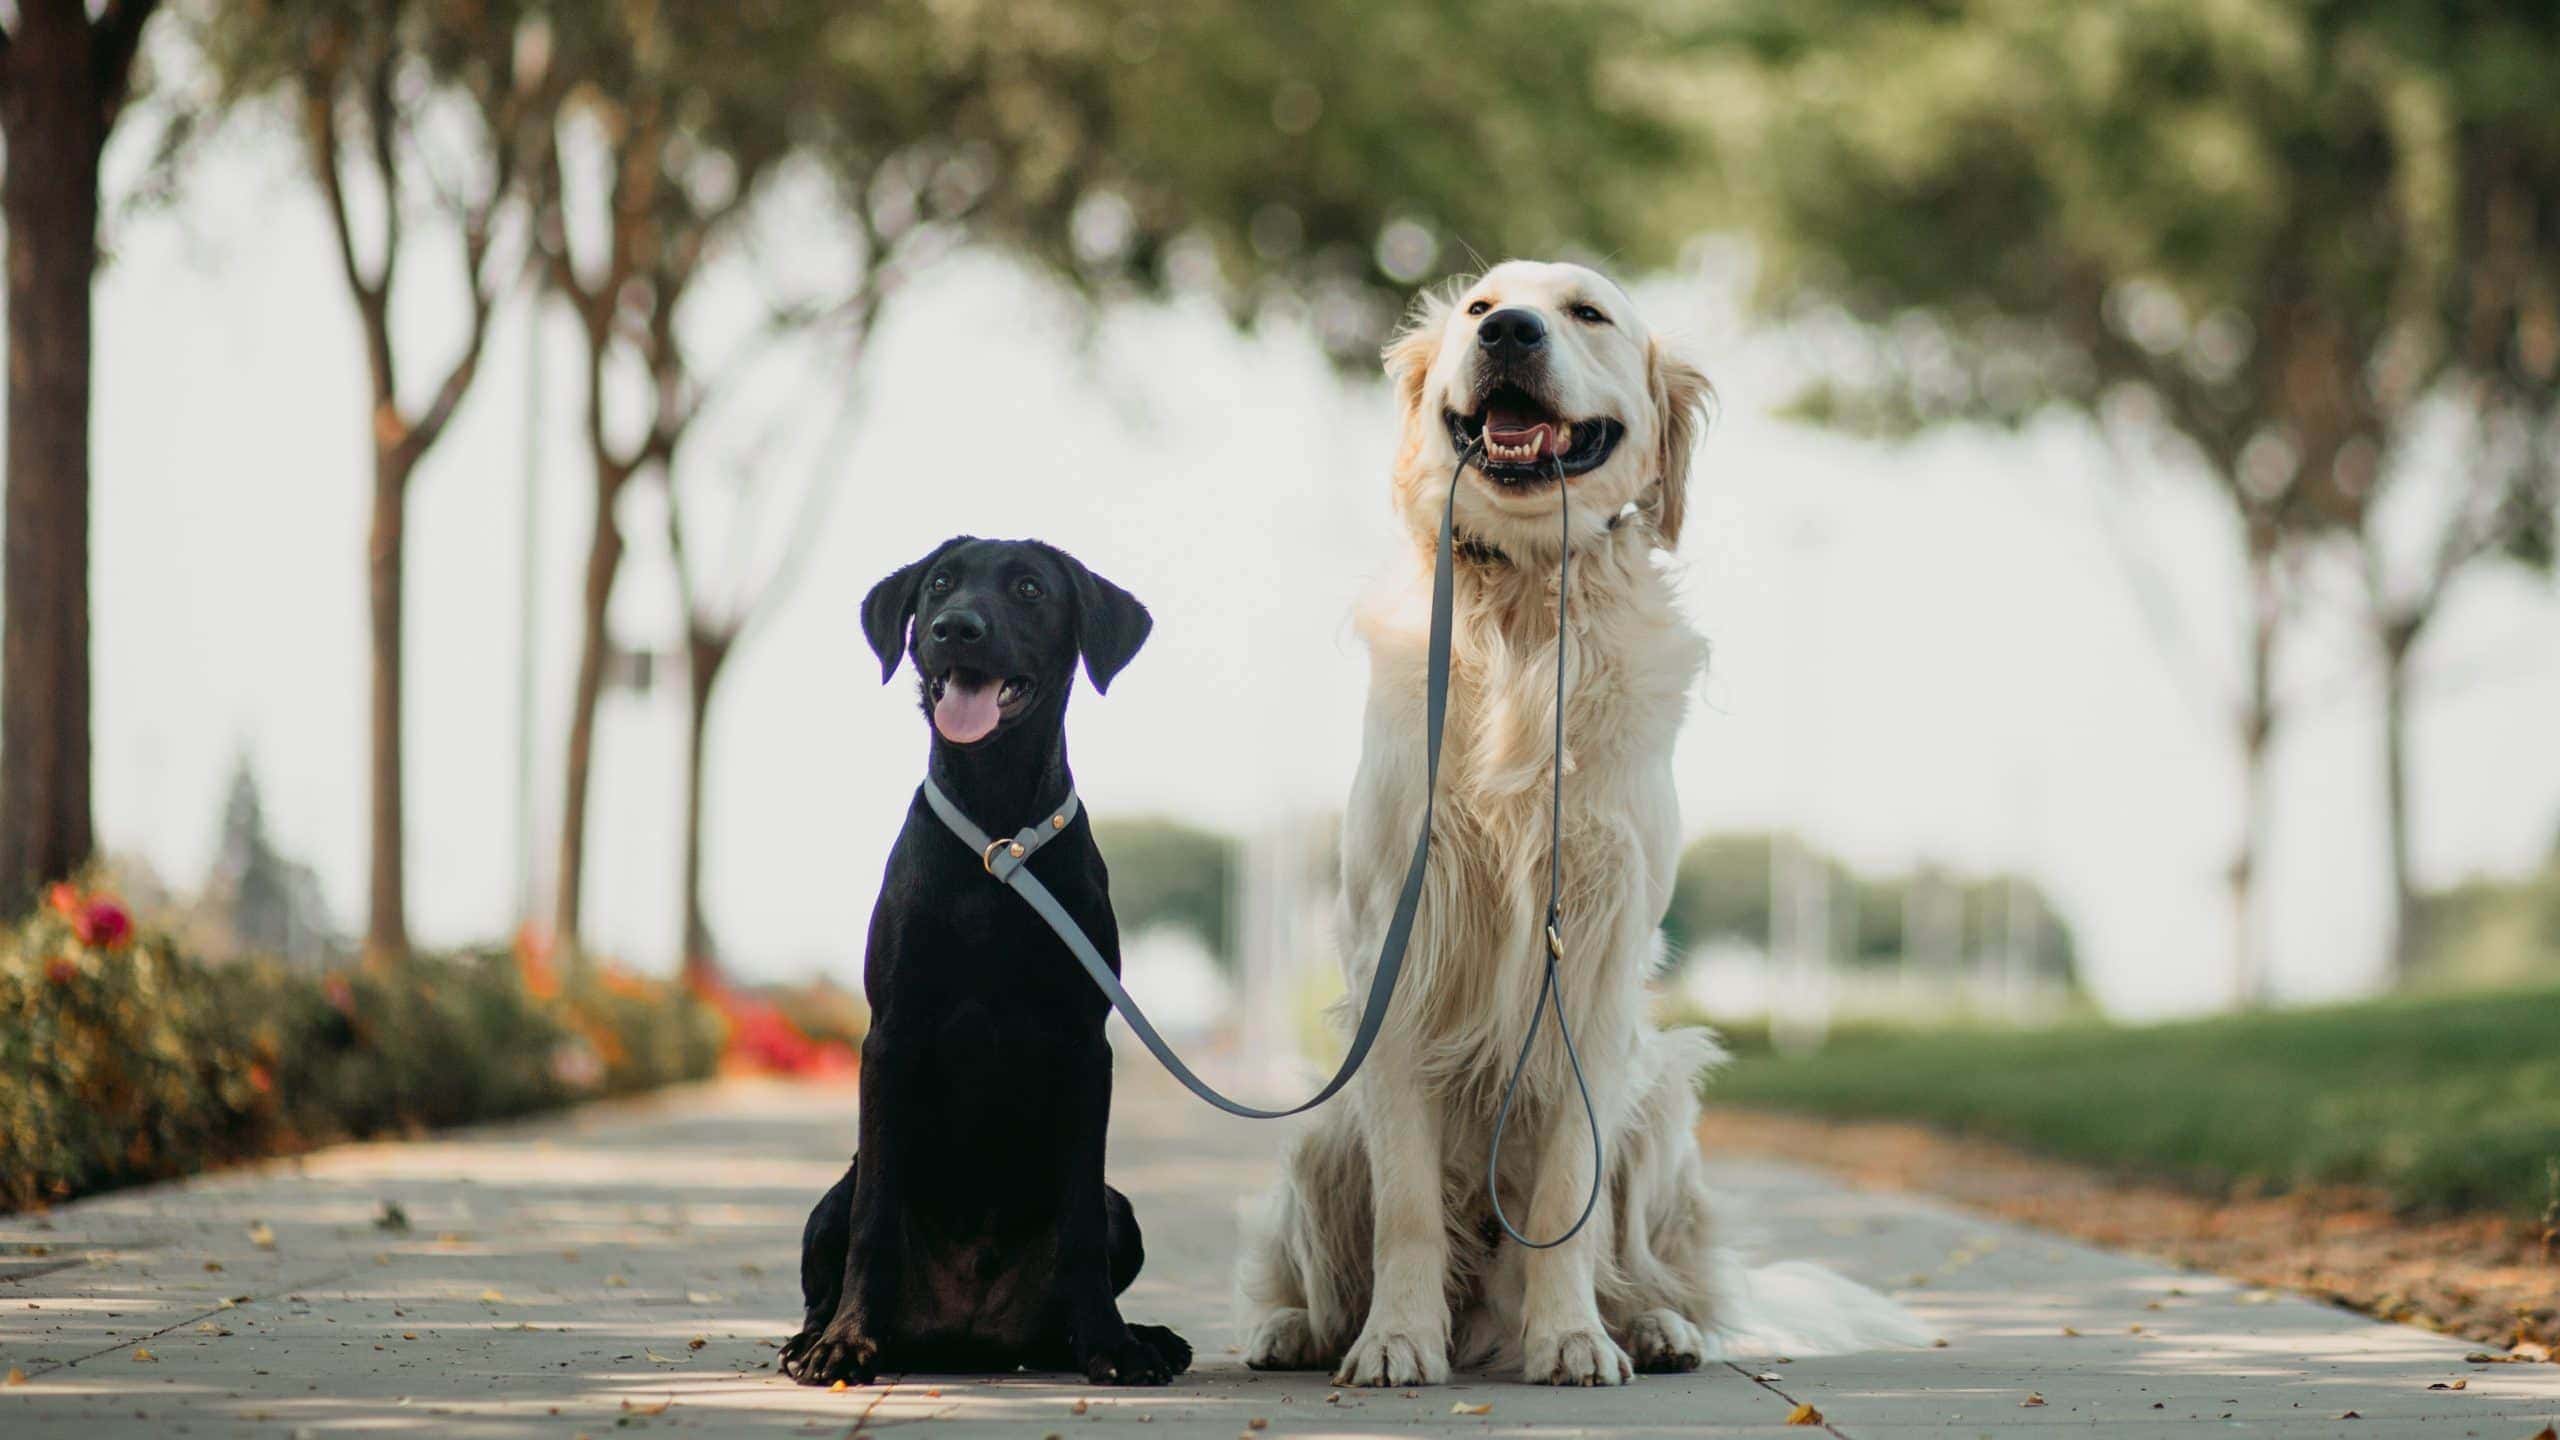 Black lab puppy and golden retriever with biothane slip leash